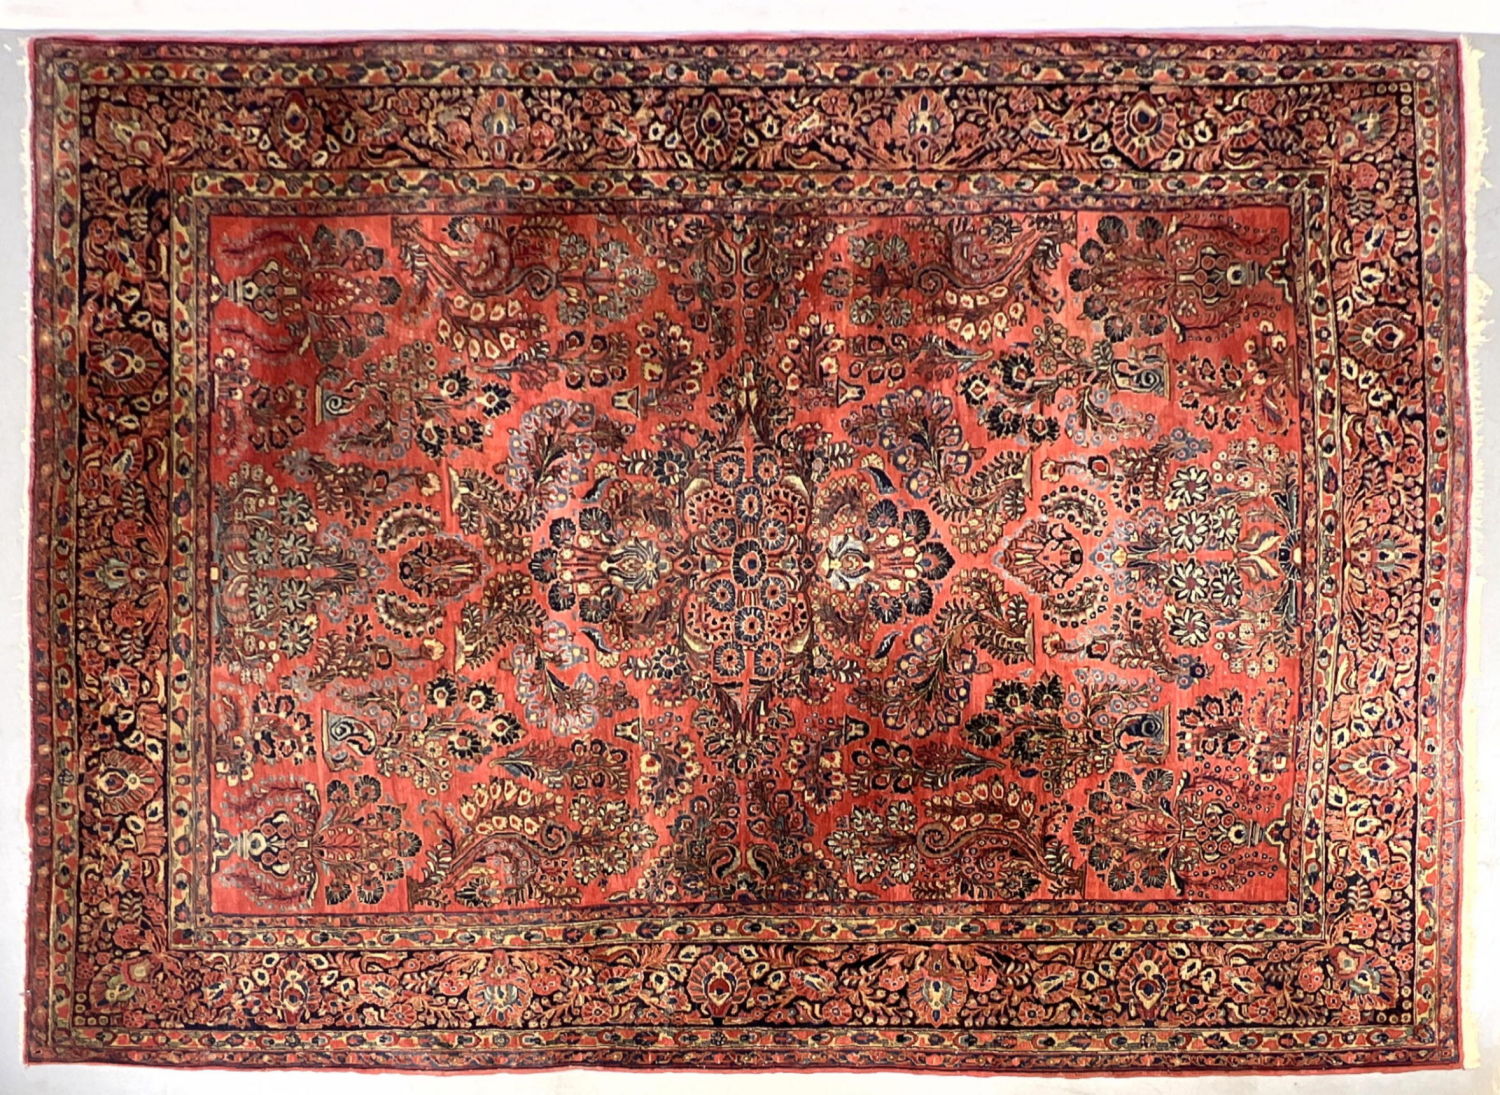 142" x 106" Handmade Oriental Carpet